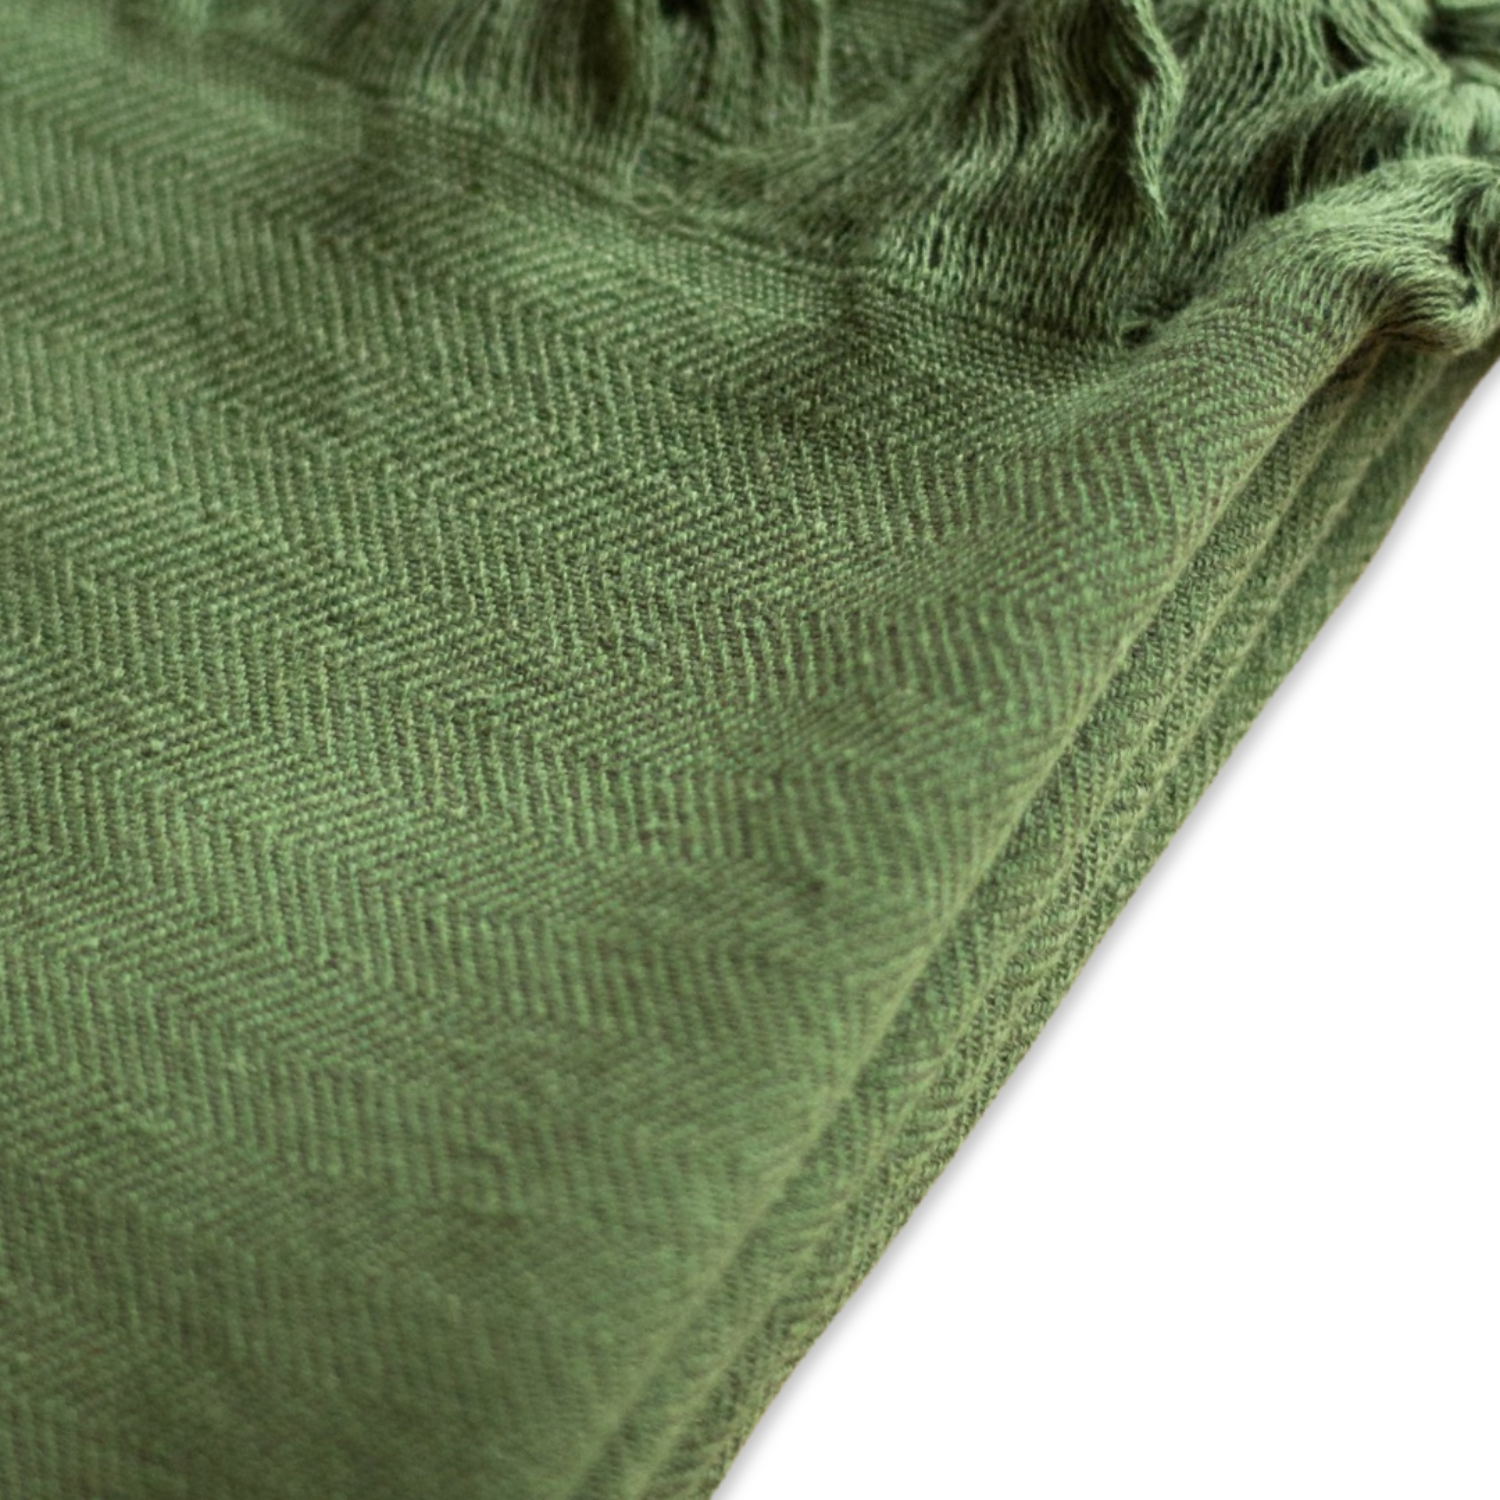 Juniper Green Egyptian Cotton Towel